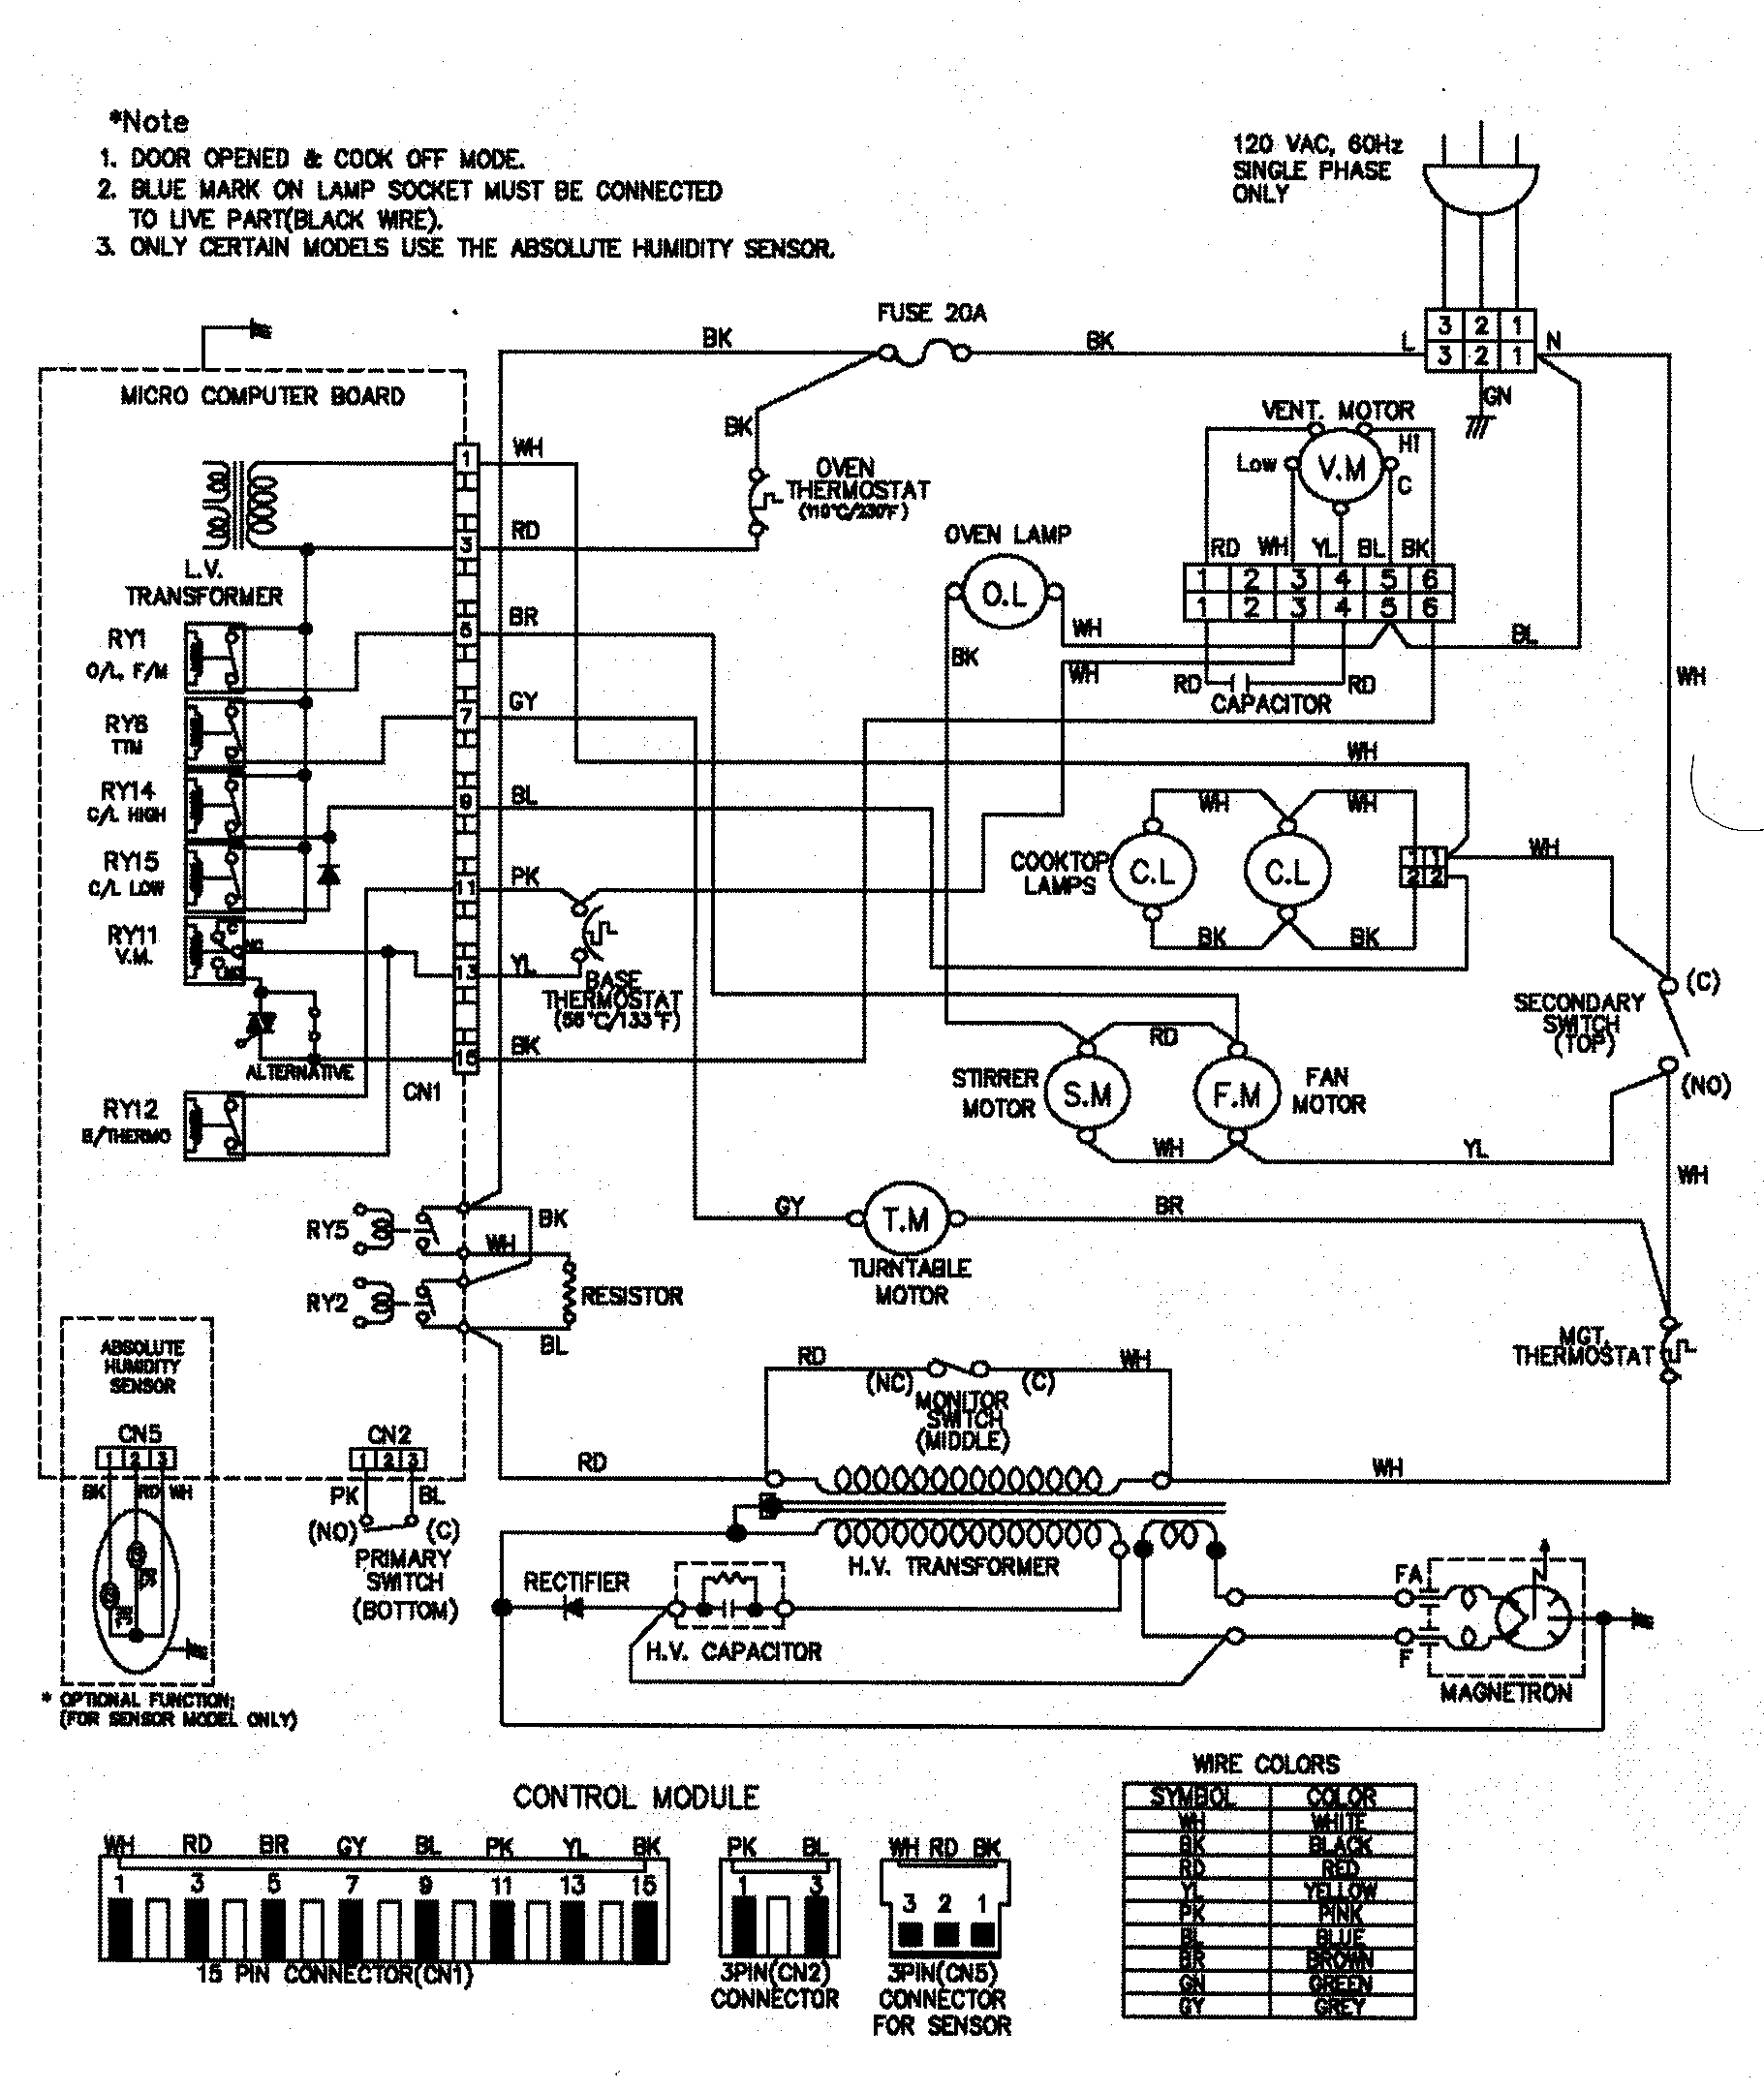 Microwave Oven Circuit Diagram 1